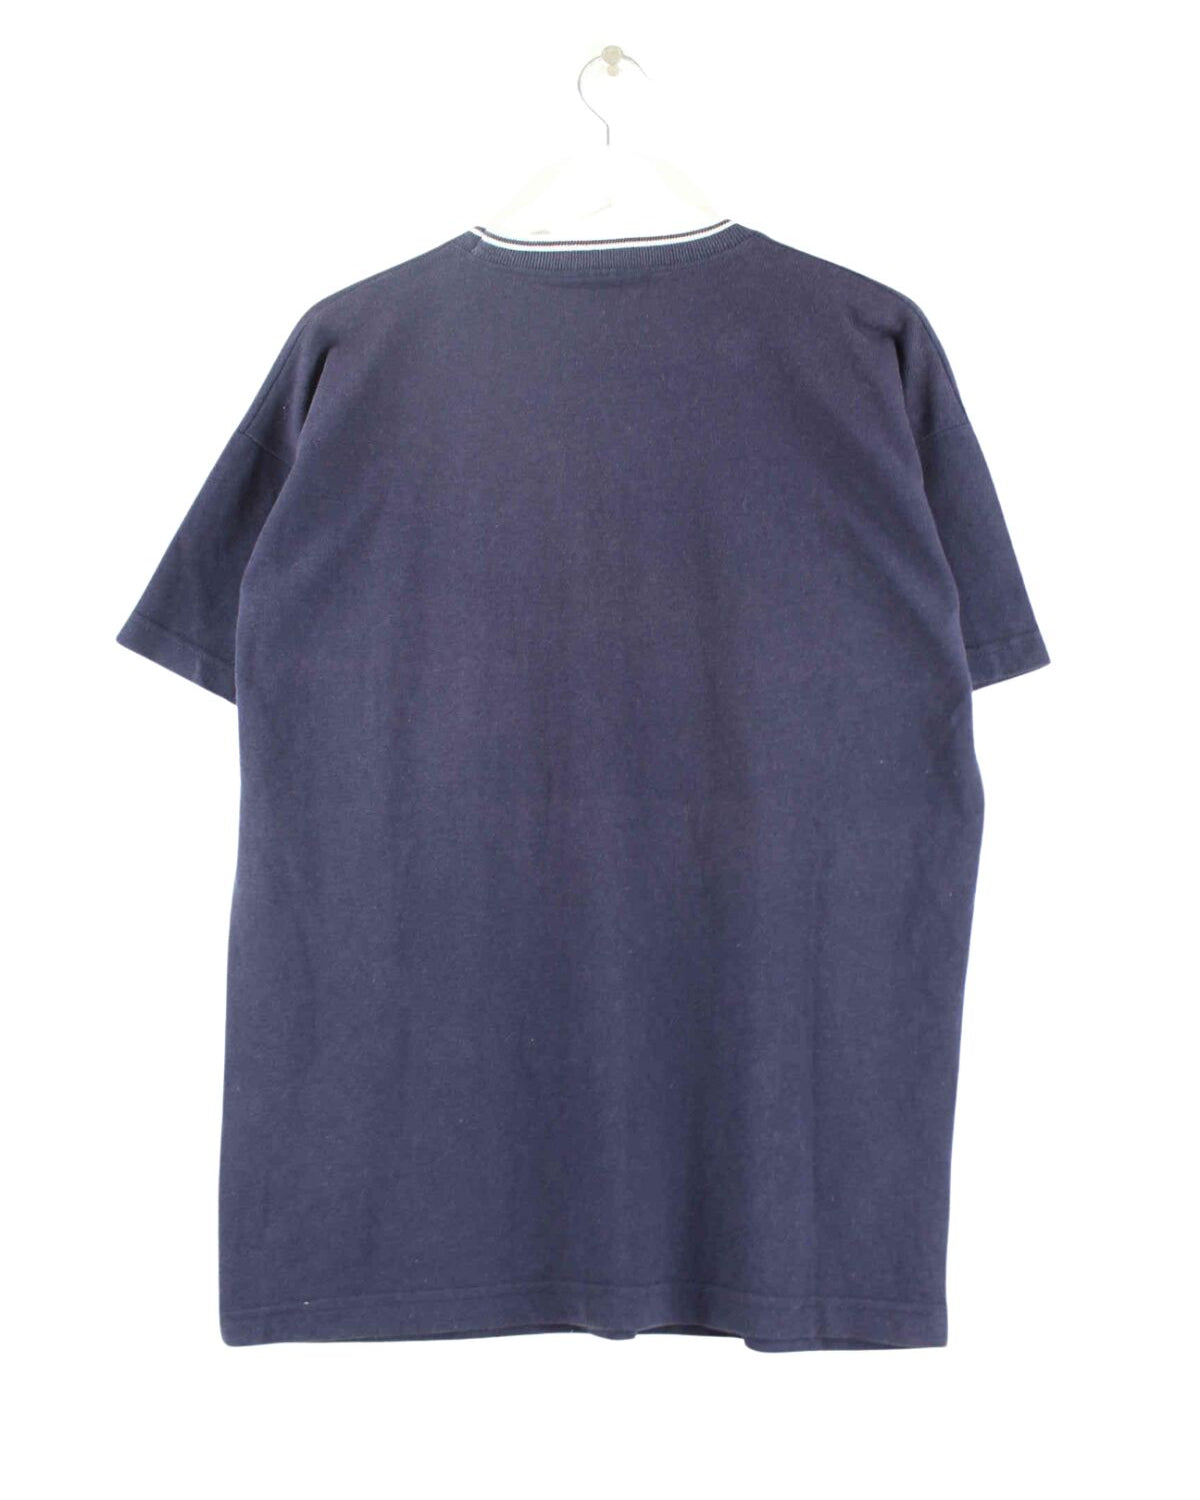 Lacoste 90s Vintage Basic T-Shirt Blau L (back image)